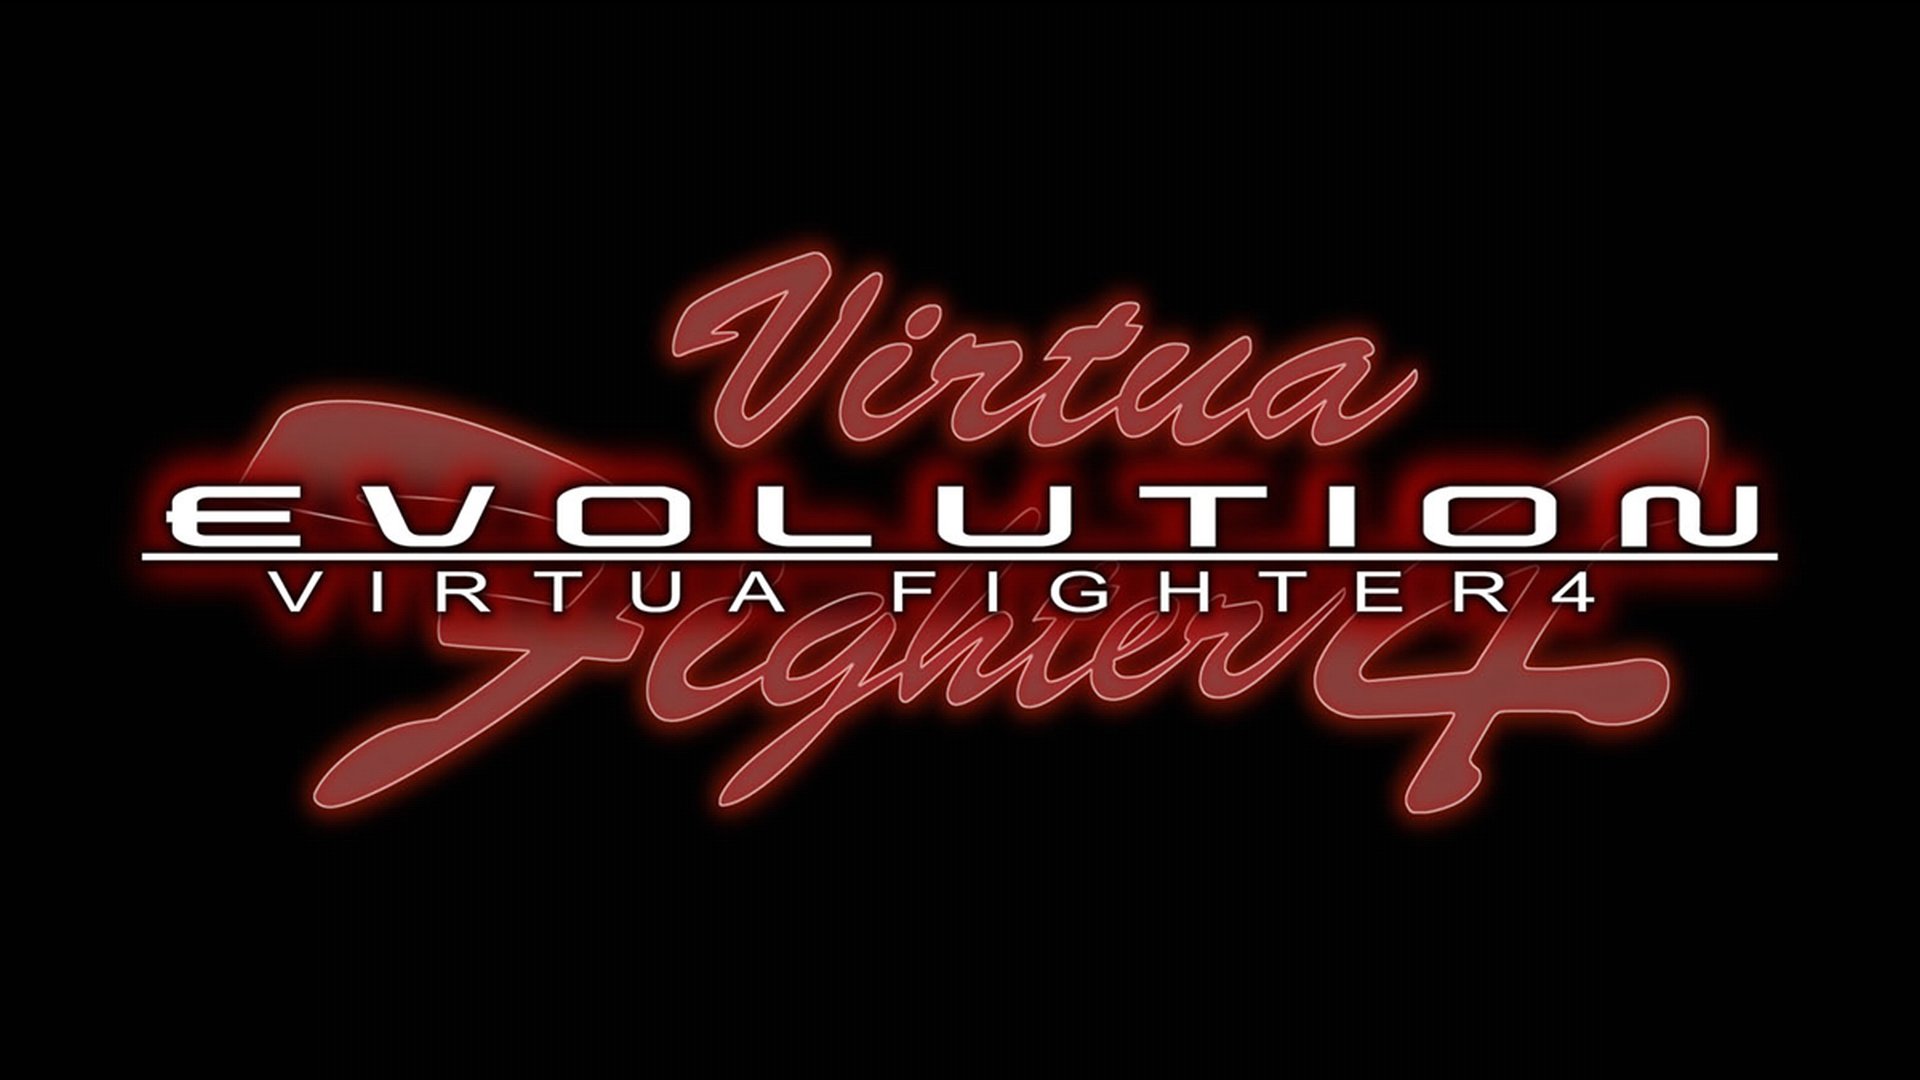 373929 descargar imagen videojuego, virtua fighter 4: evolution, luchador virtual: fondos de pantalla y protectores de pantalla gratis